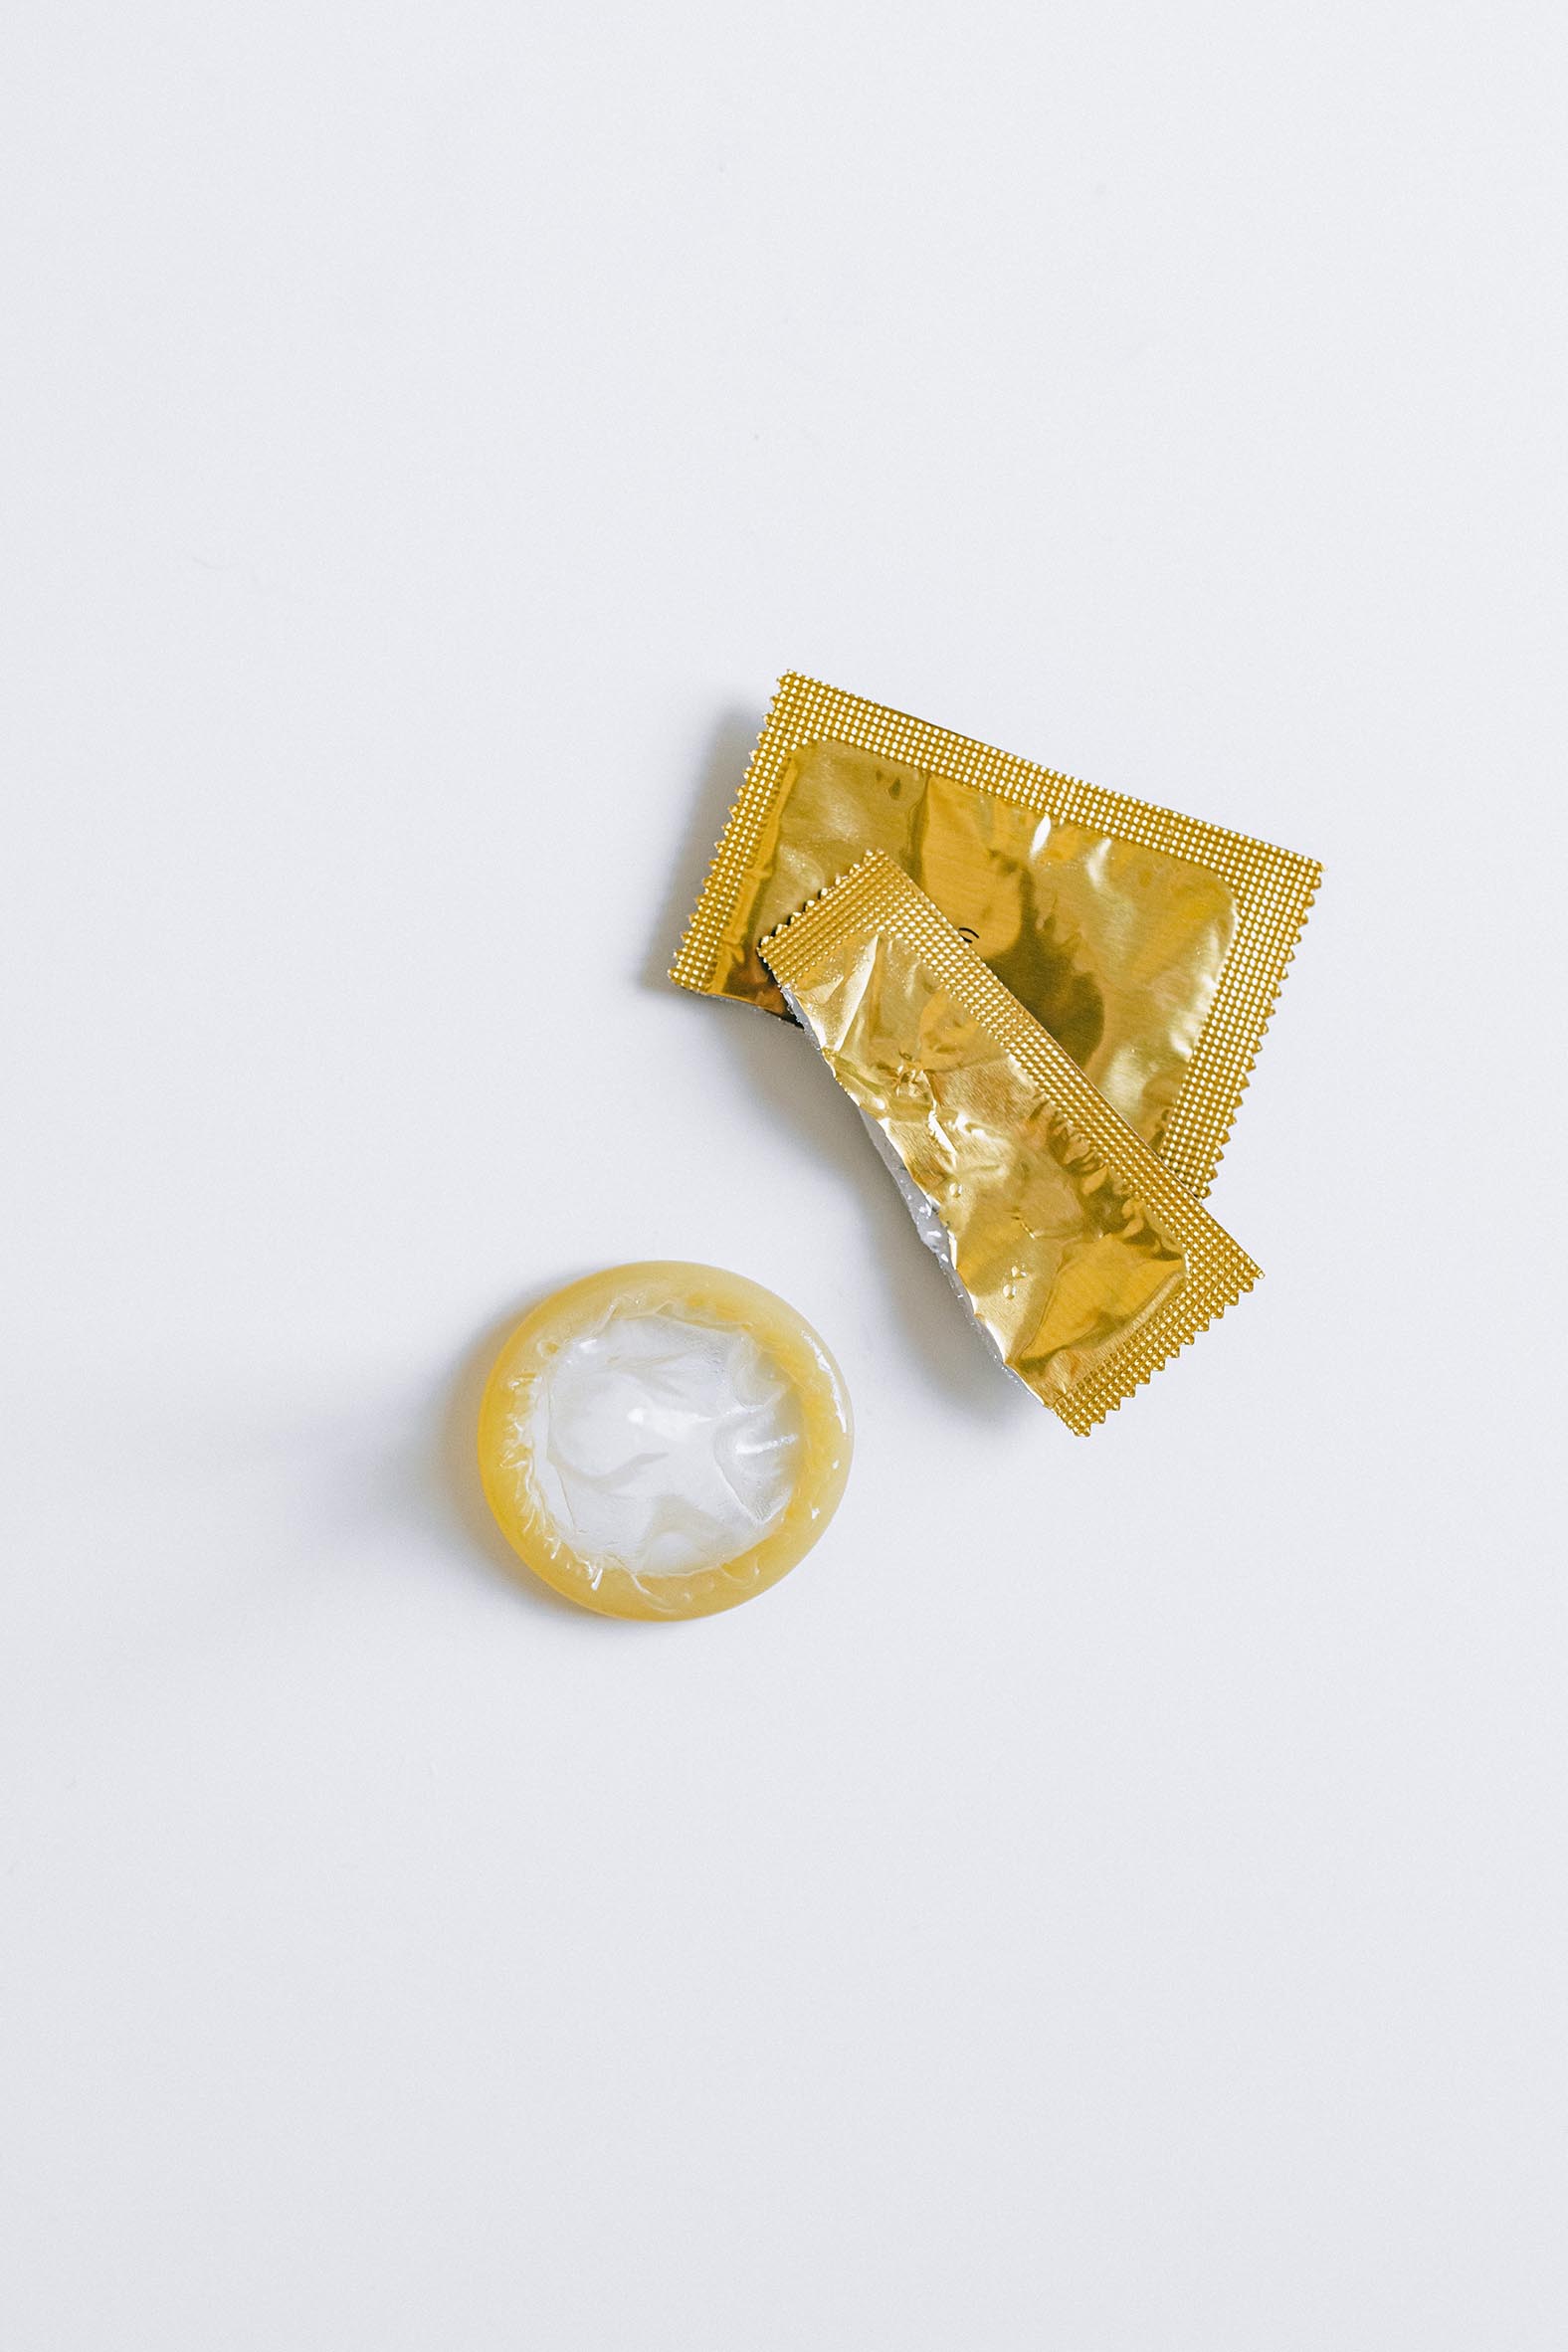 Pearl-Index Vergleich: Kondome